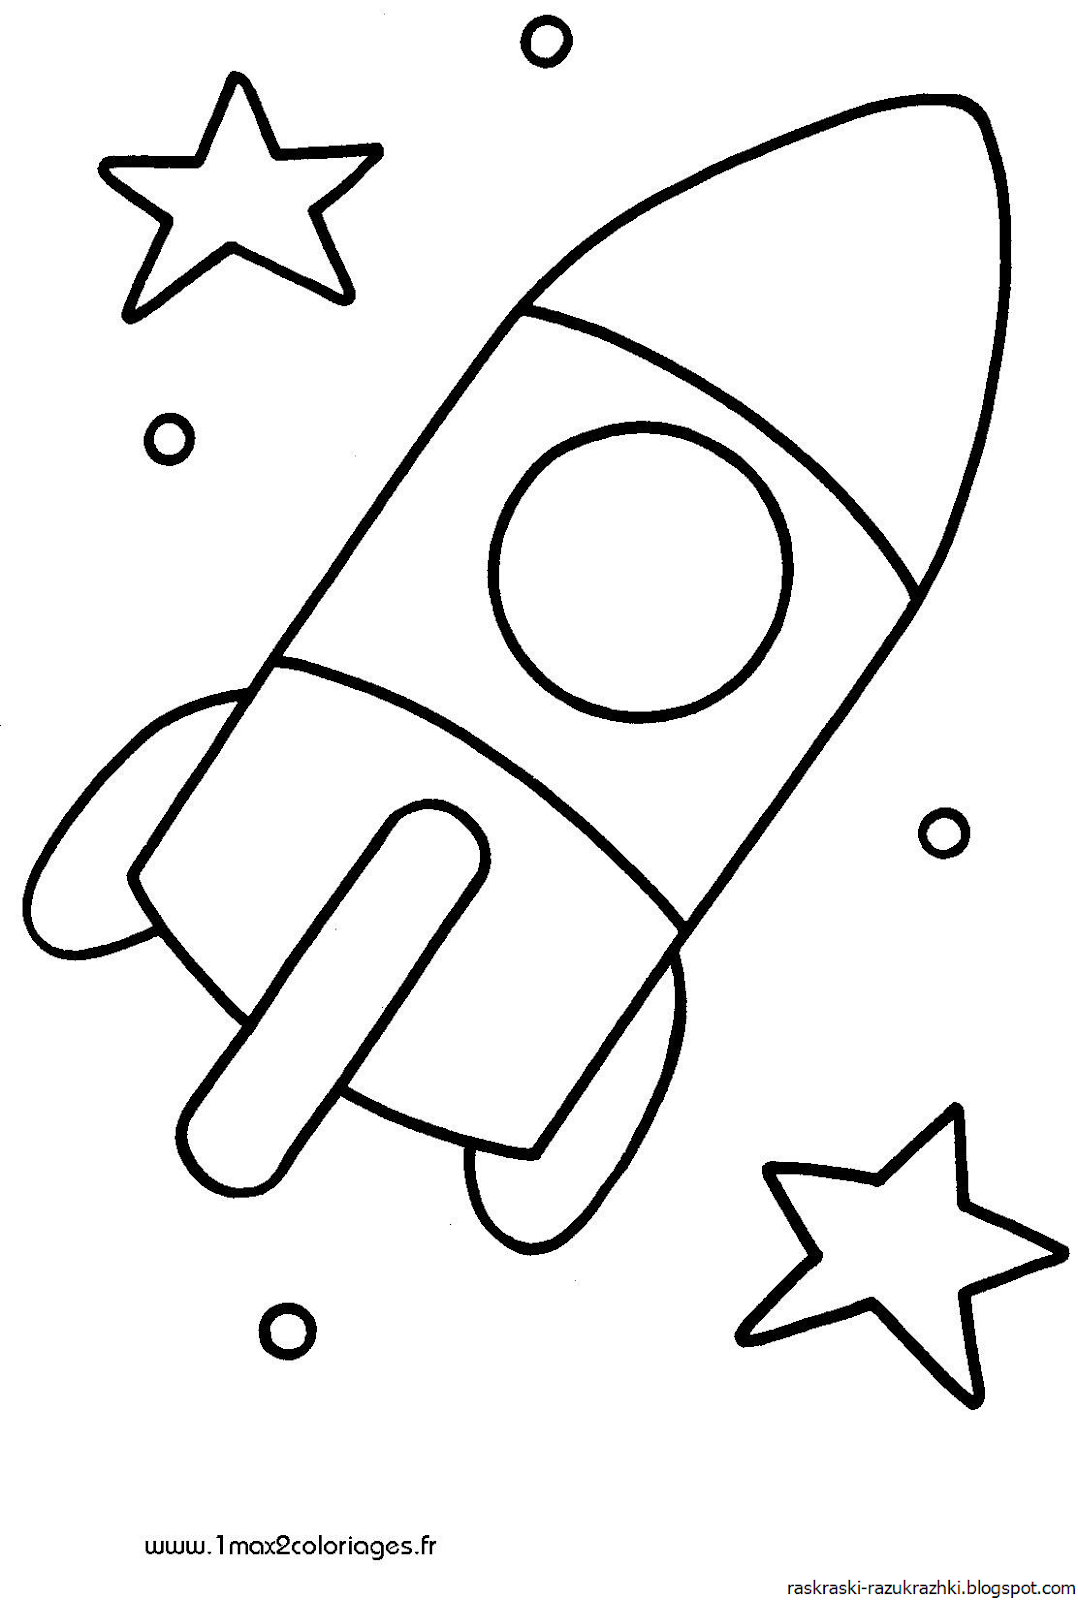 Раскраска ракета в космосе для детей. Ракета раскраска. Ракета раскраска для малышей. Раскраски на тему космос для детей 3-4 лет. Раскраска для малышей. Космос.